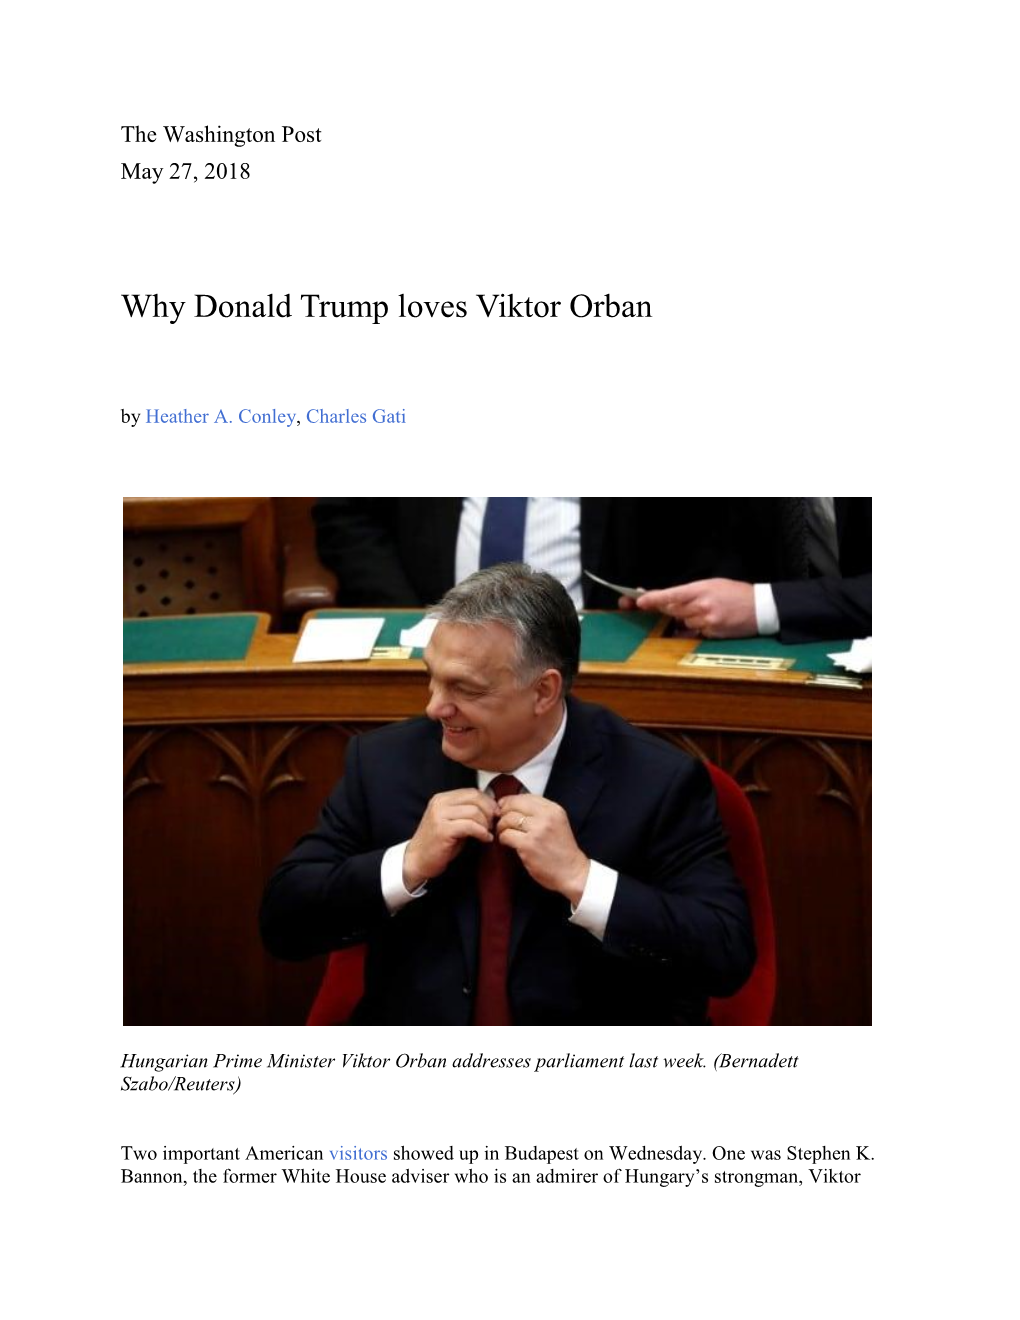 Why Donald Trump Loves Viktor Orban